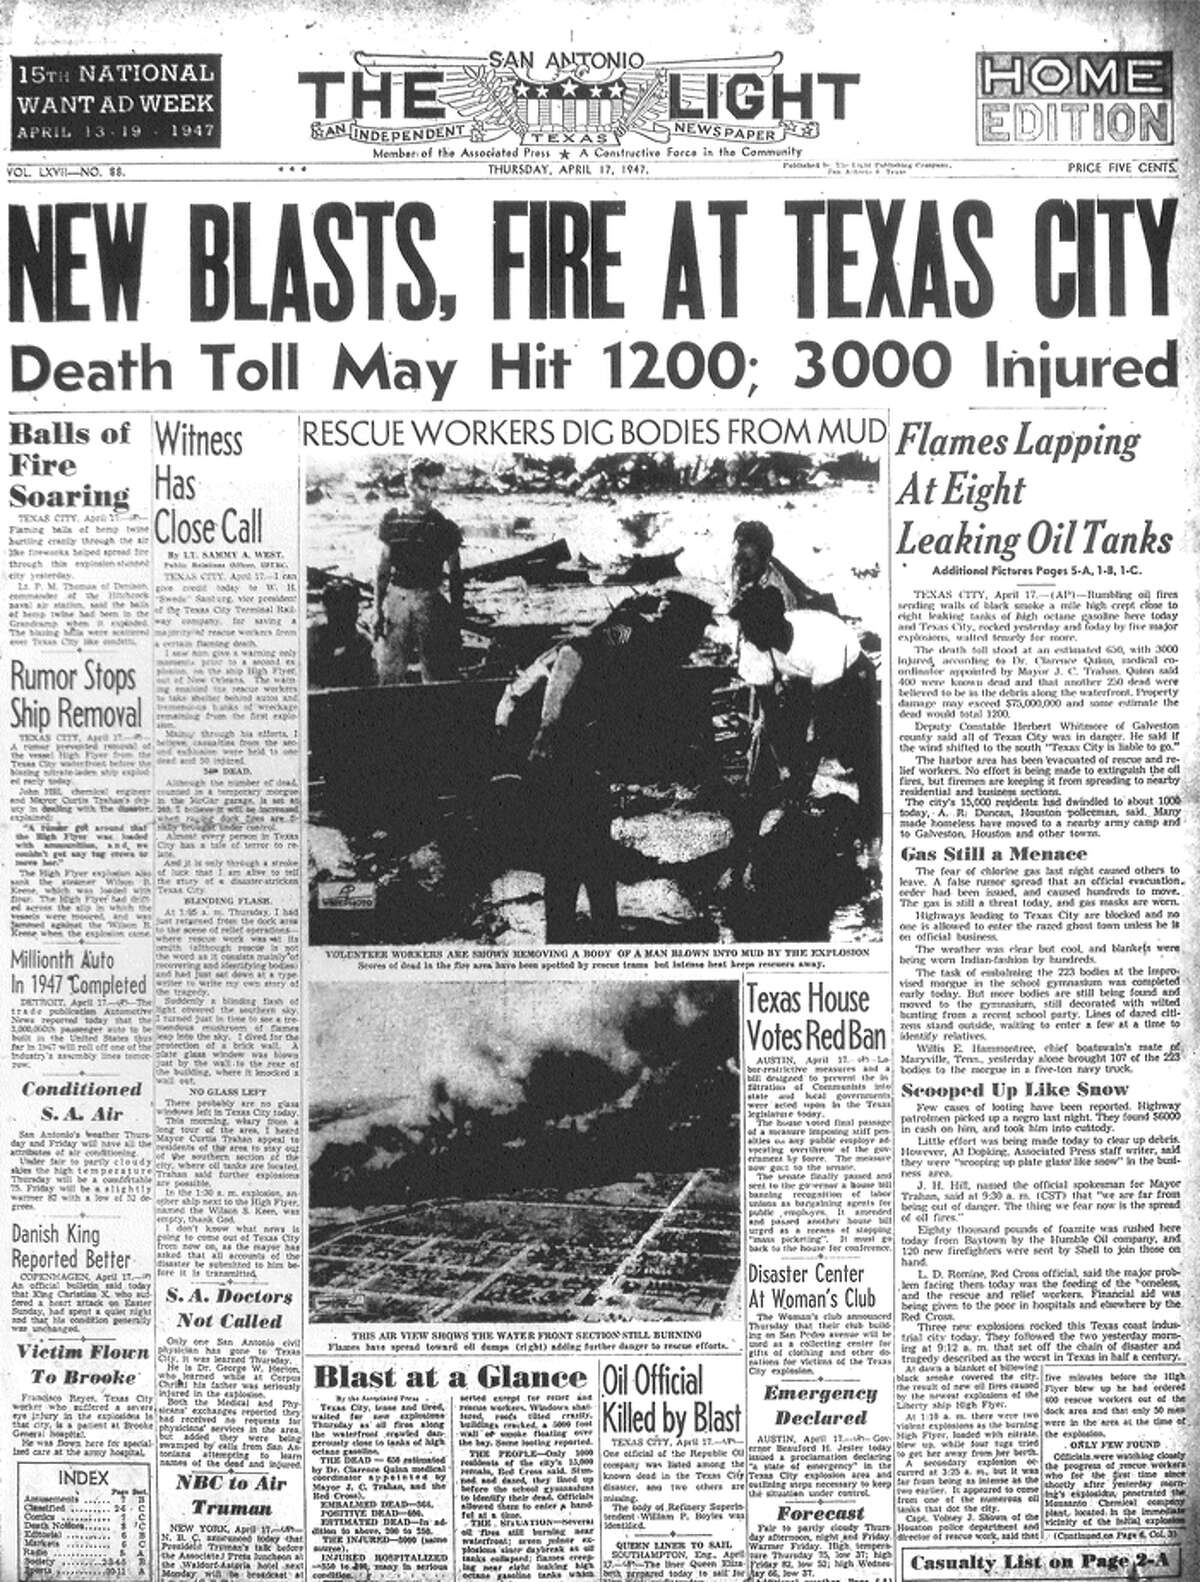 The 1947 Texas City Explosion